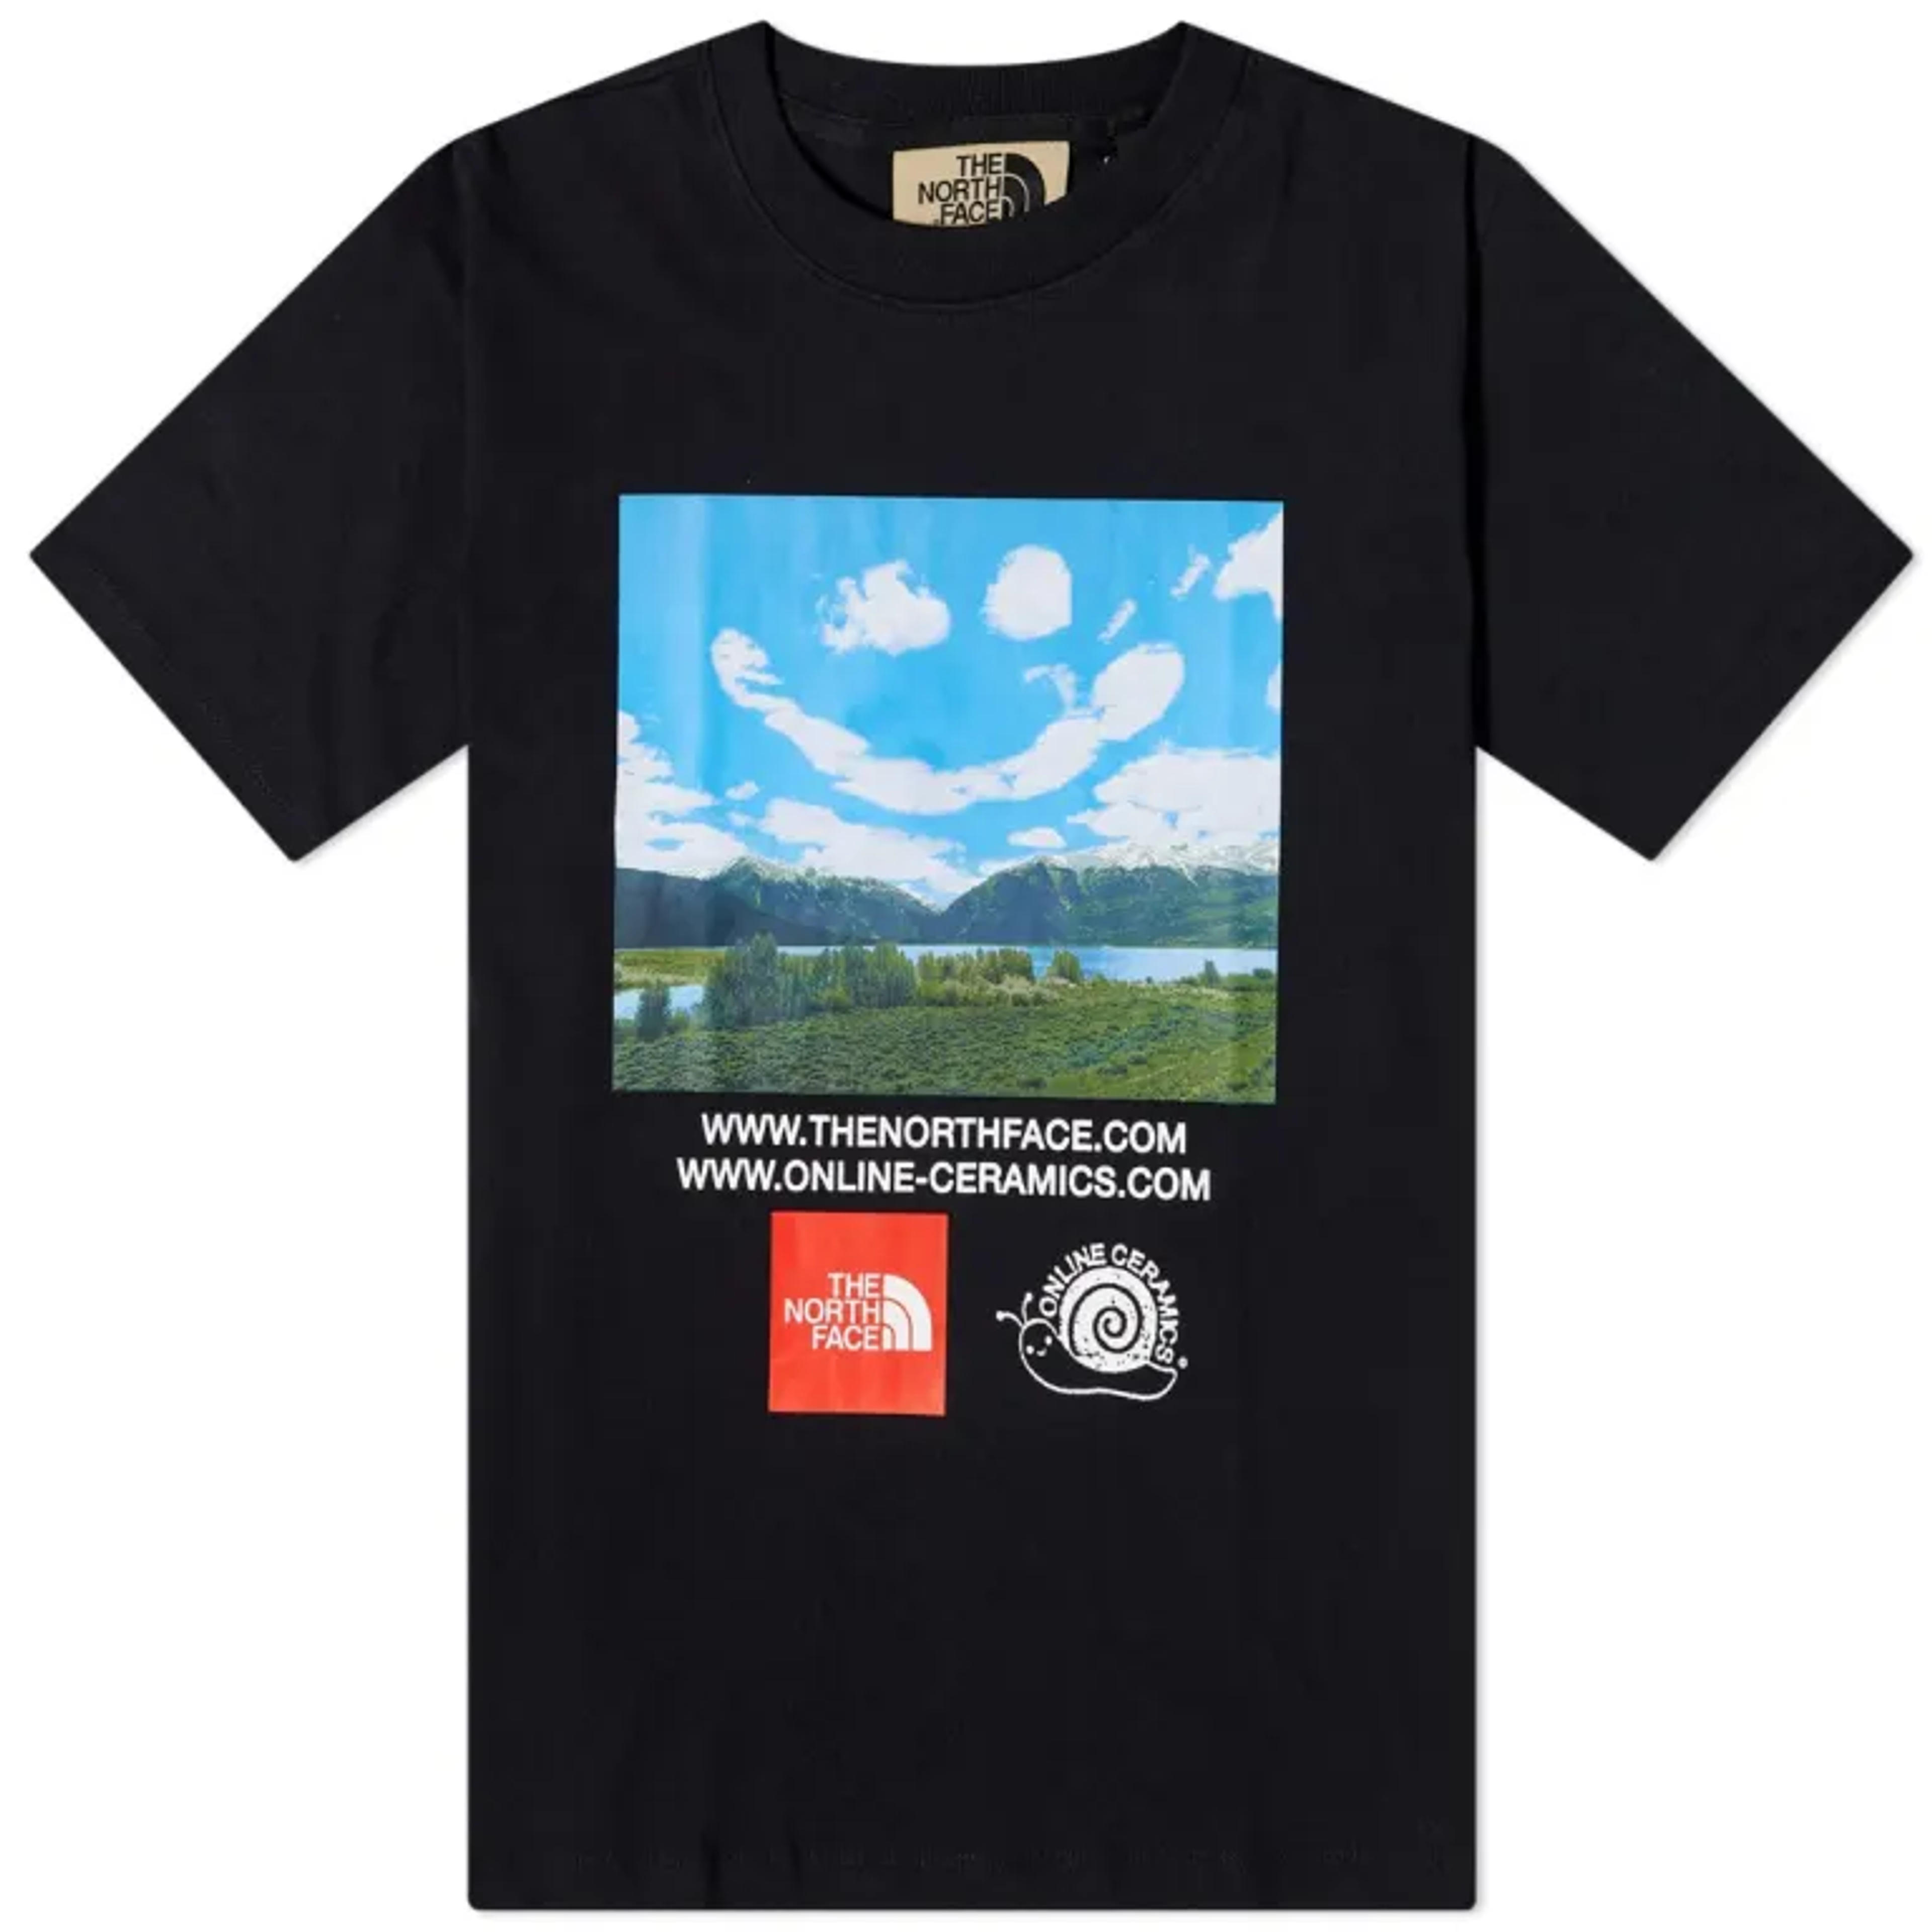 The North Face x Online Ceramics T-Shirt Black | END.